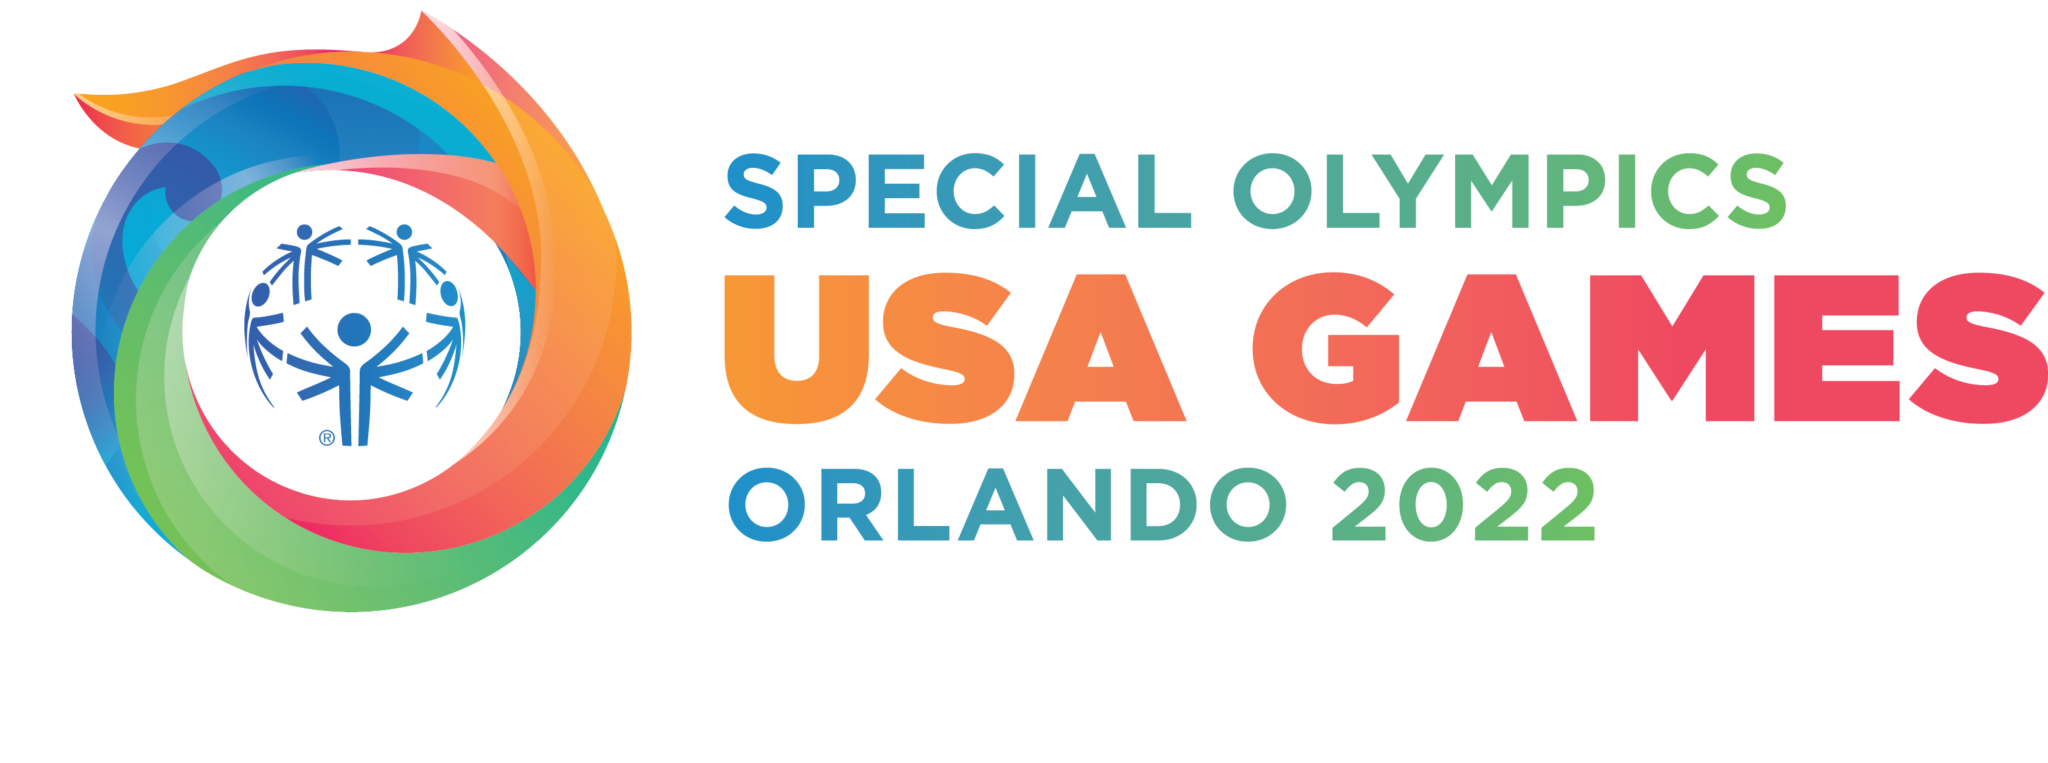 Special Olympics Washington2022 Special Olympics USA Games Special